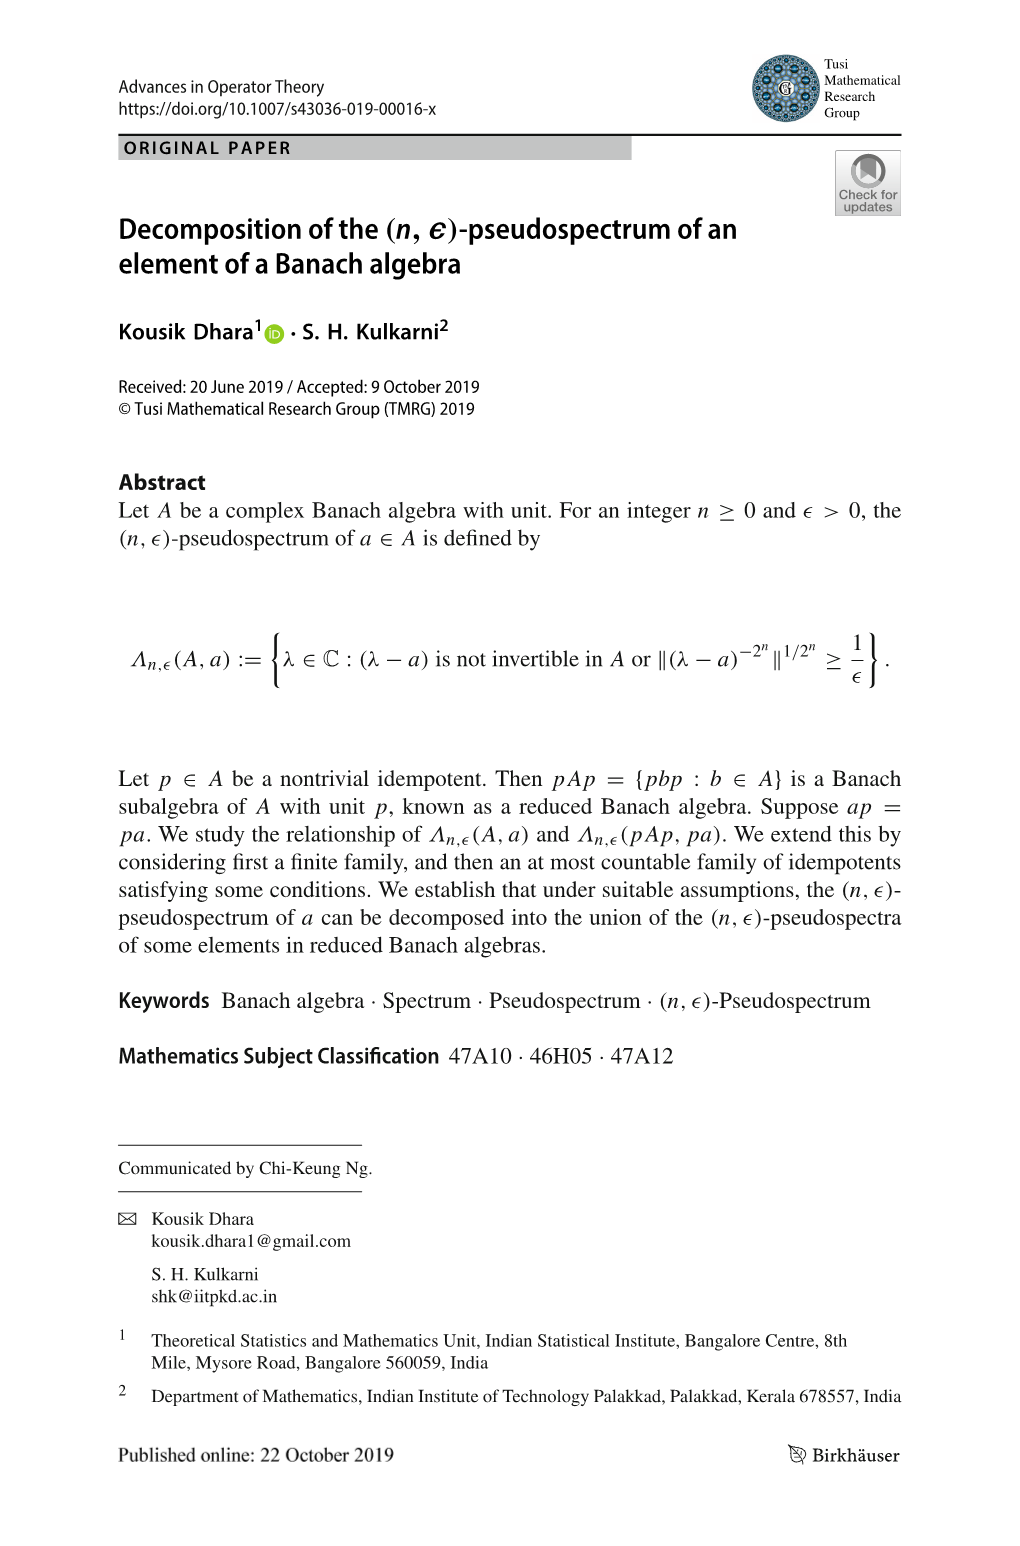 Pseudospectrum of an Element of a Banach Algebra